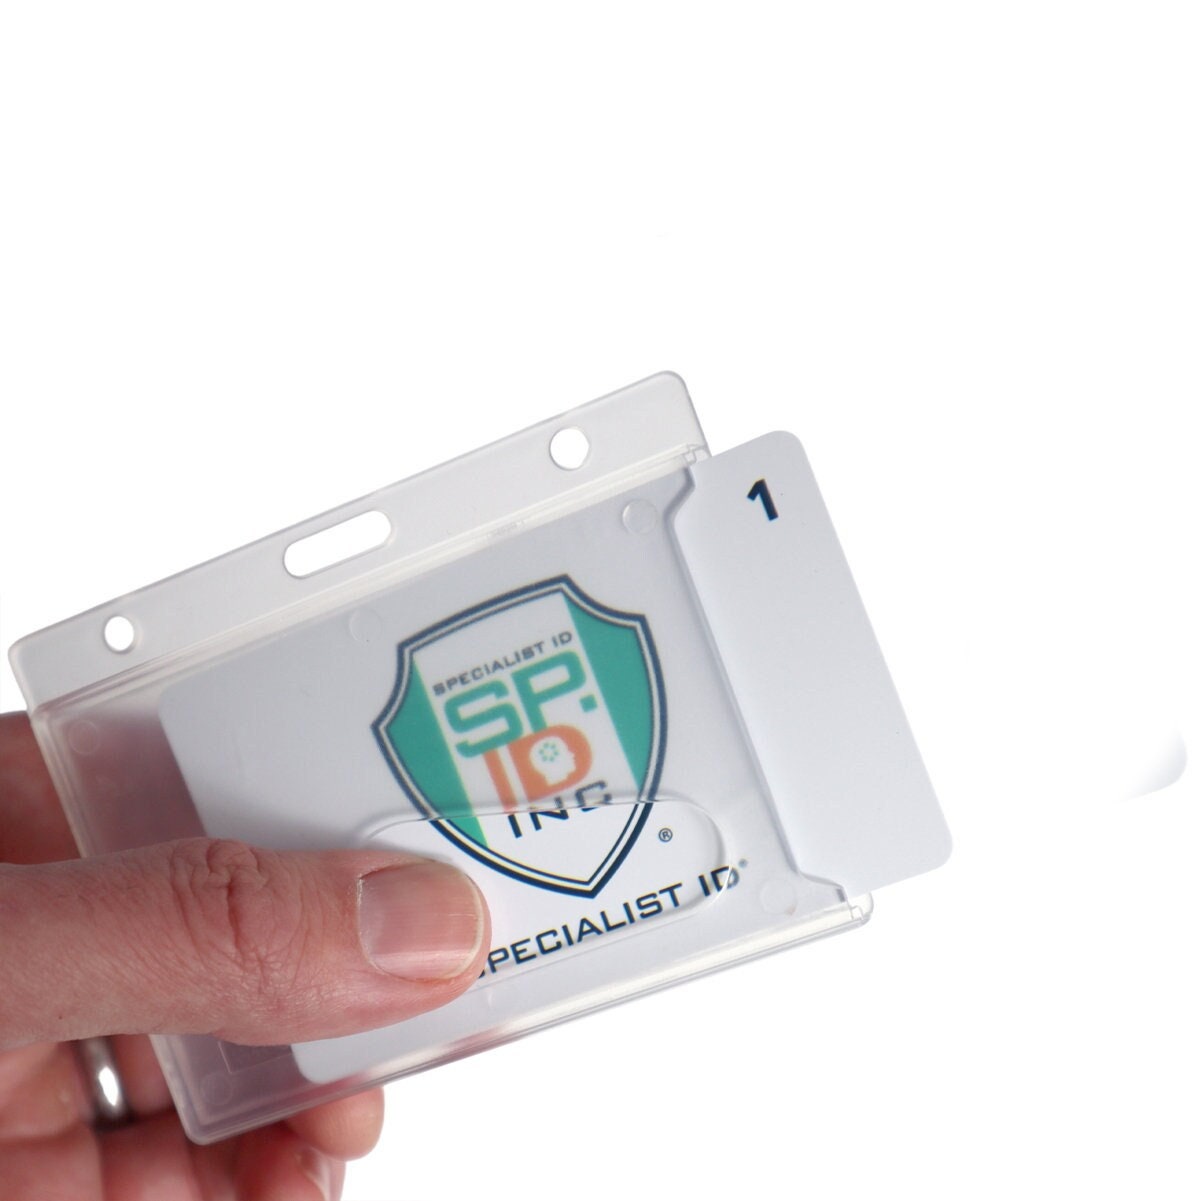 RFID Blocking ID Badge Holder (Holds 2 Cards) - SkimSAFE FIPS 201 Approved  - Dual Sided Shield Blocks 13.56MHz Radio Signal - Specialist ID (Black)